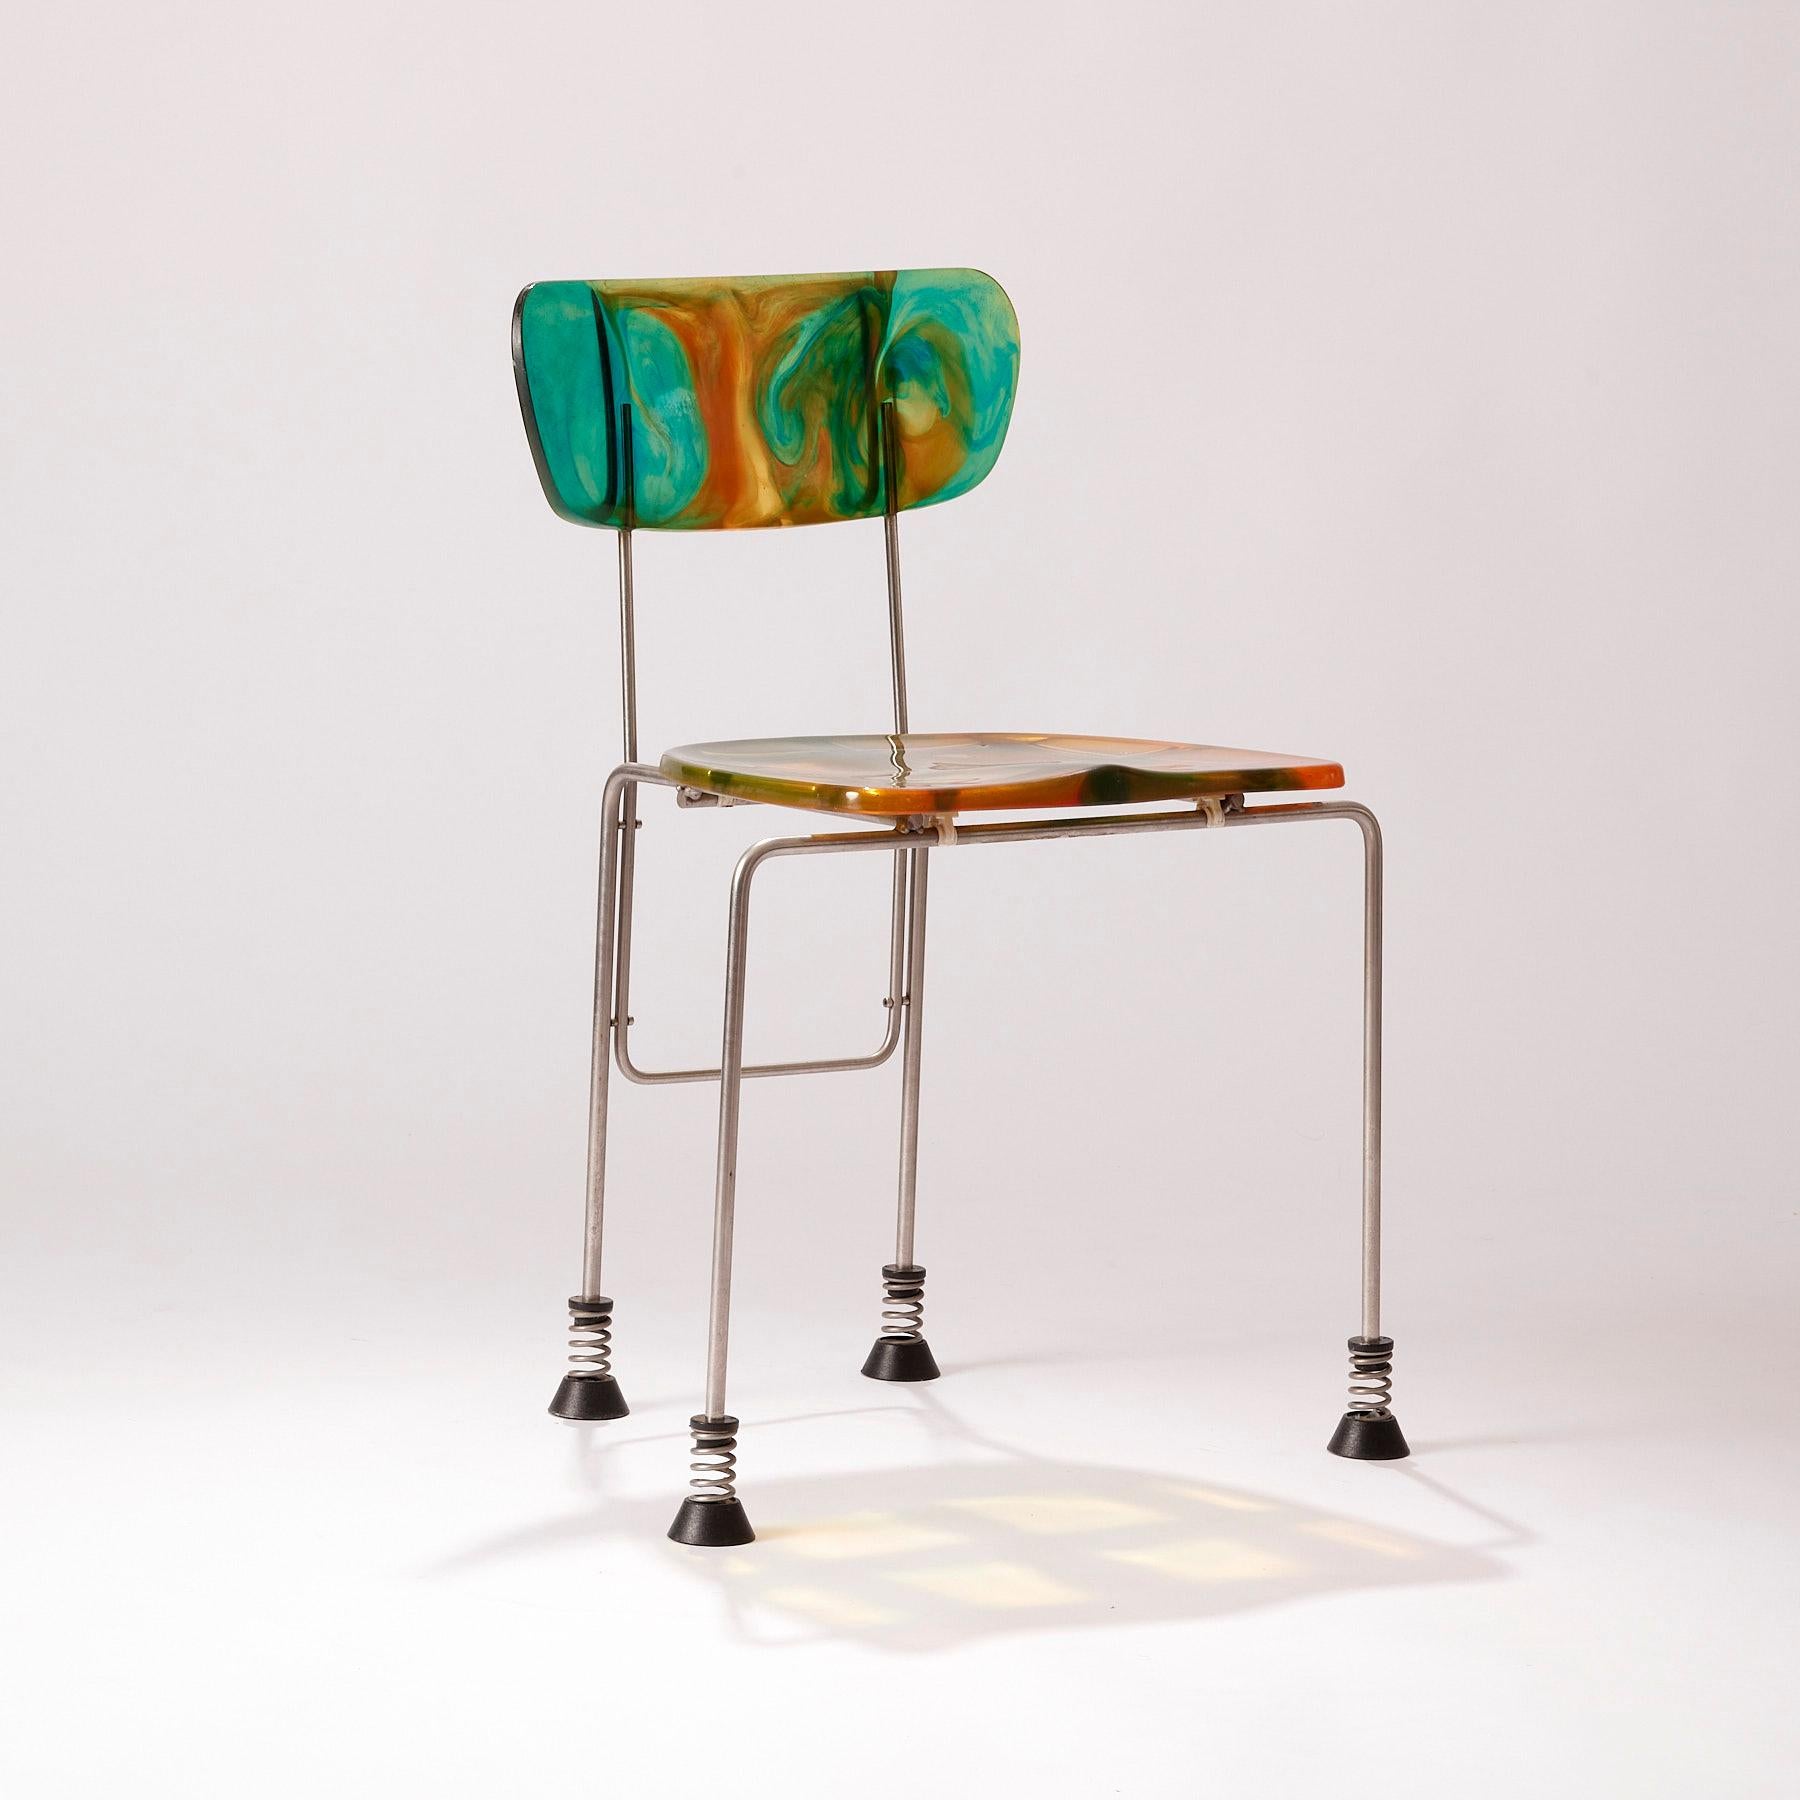 GAETANO PESCE (born 1939)
Broadway chair, 1993
Bernini publisher 
Epoxy resin and stainless steel
H. 75 cm - L. 55 cm - Depth : 40 cm.